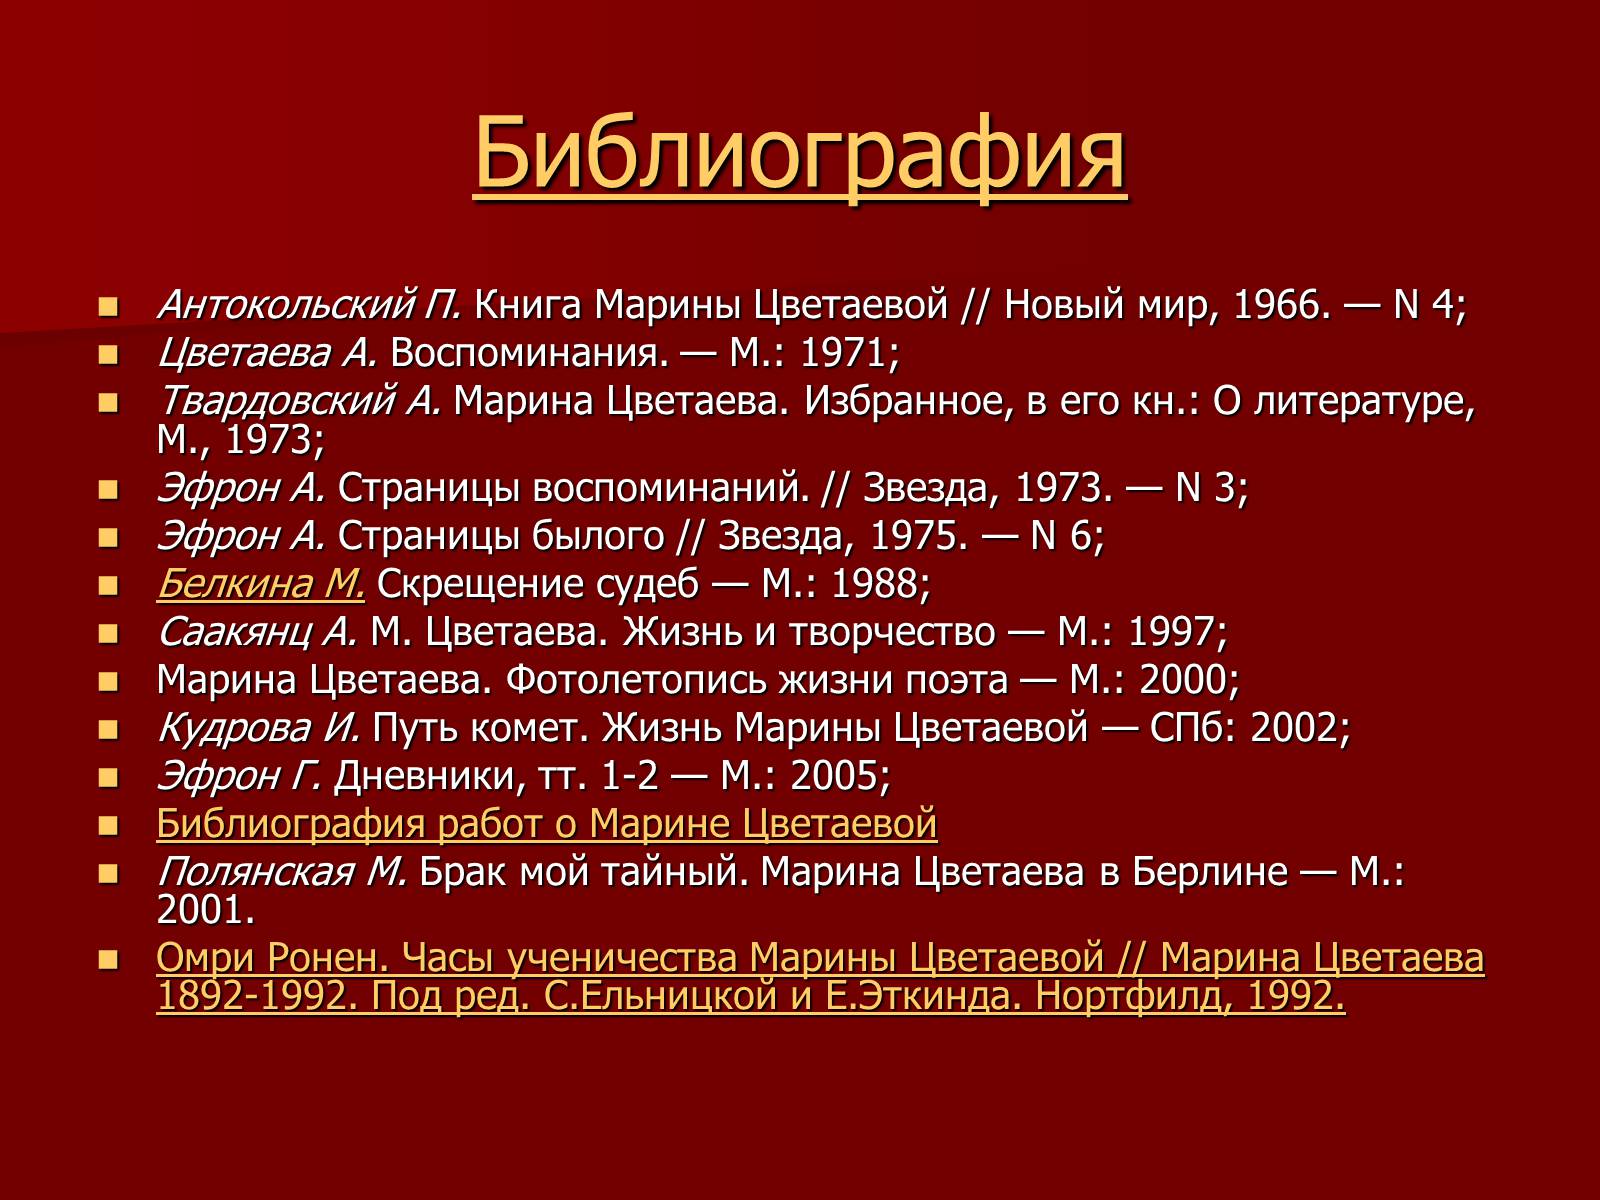 Ахматова хронологическая таблица творчества. Хронологическая таблица жизни Цветаевой.